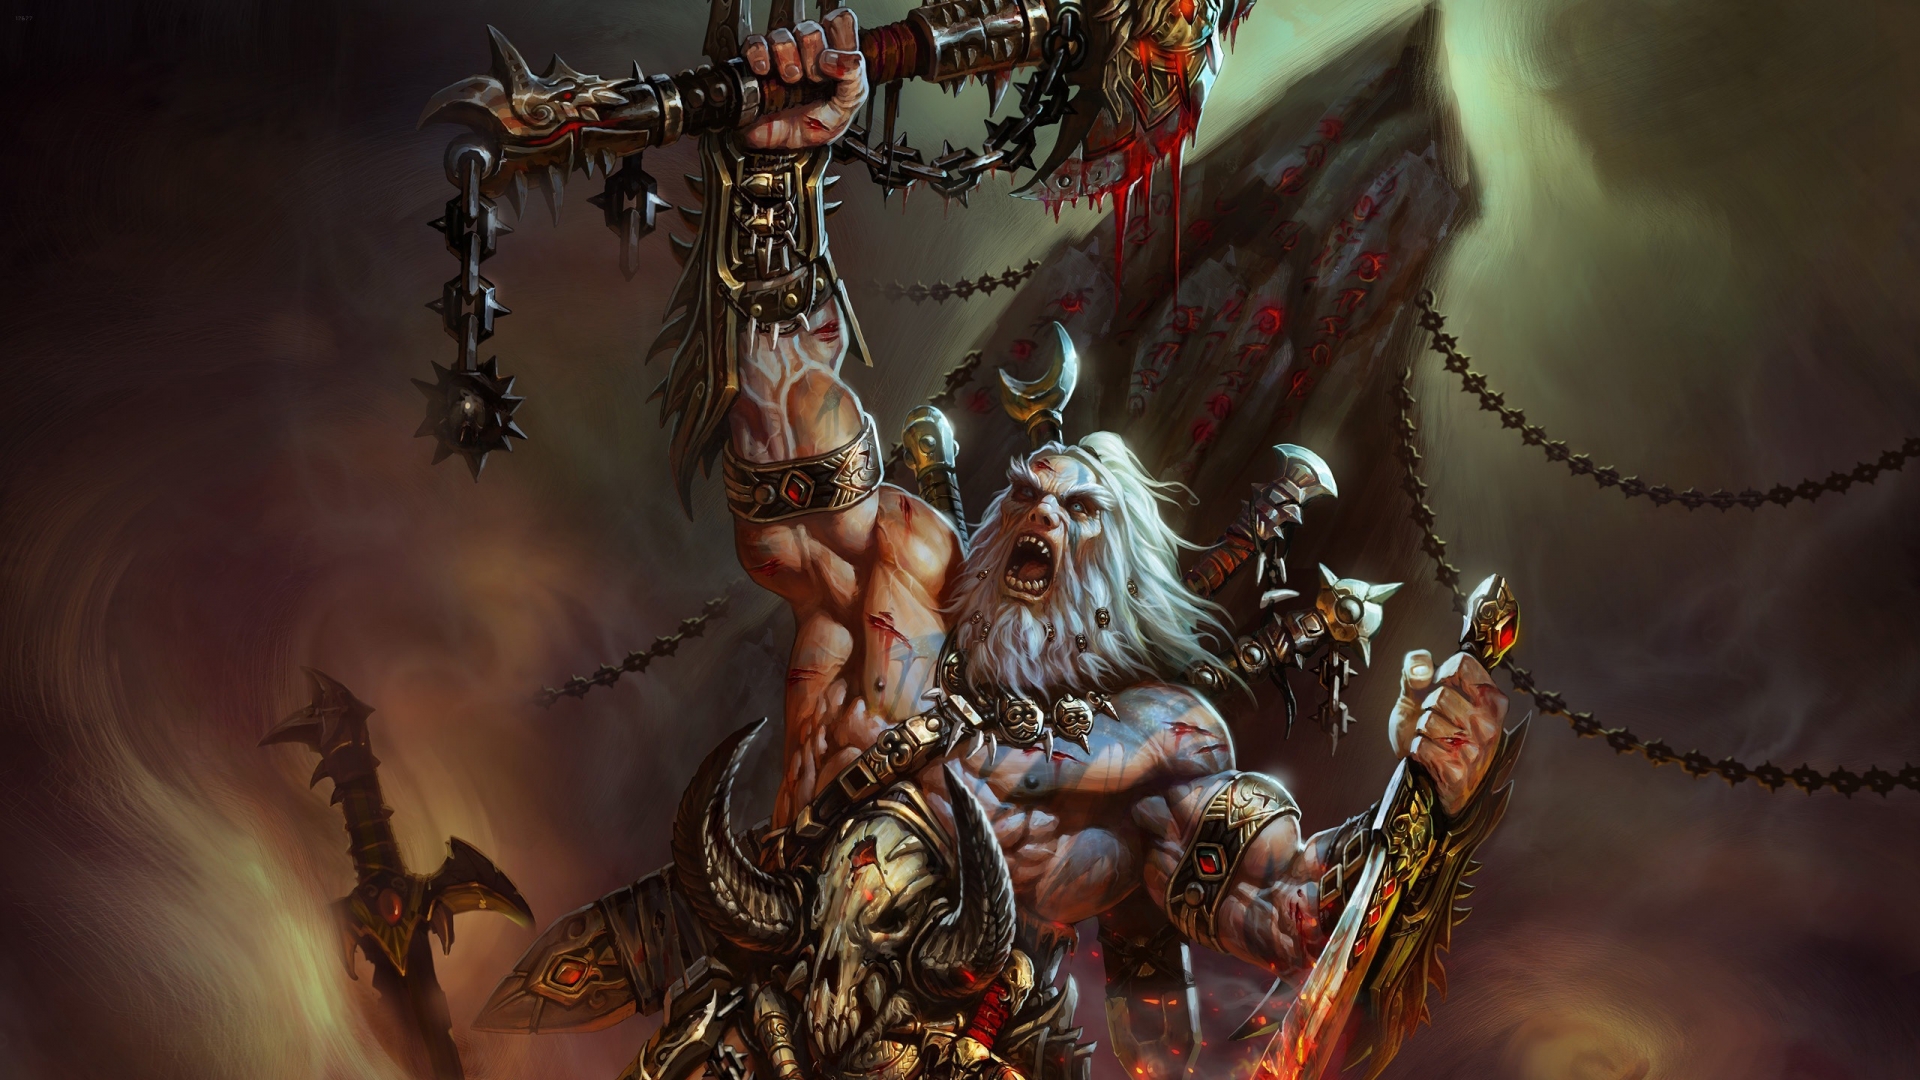 Diablo 3 - The Barbarian for 1920 x 1080 HDTV 1080p resolution